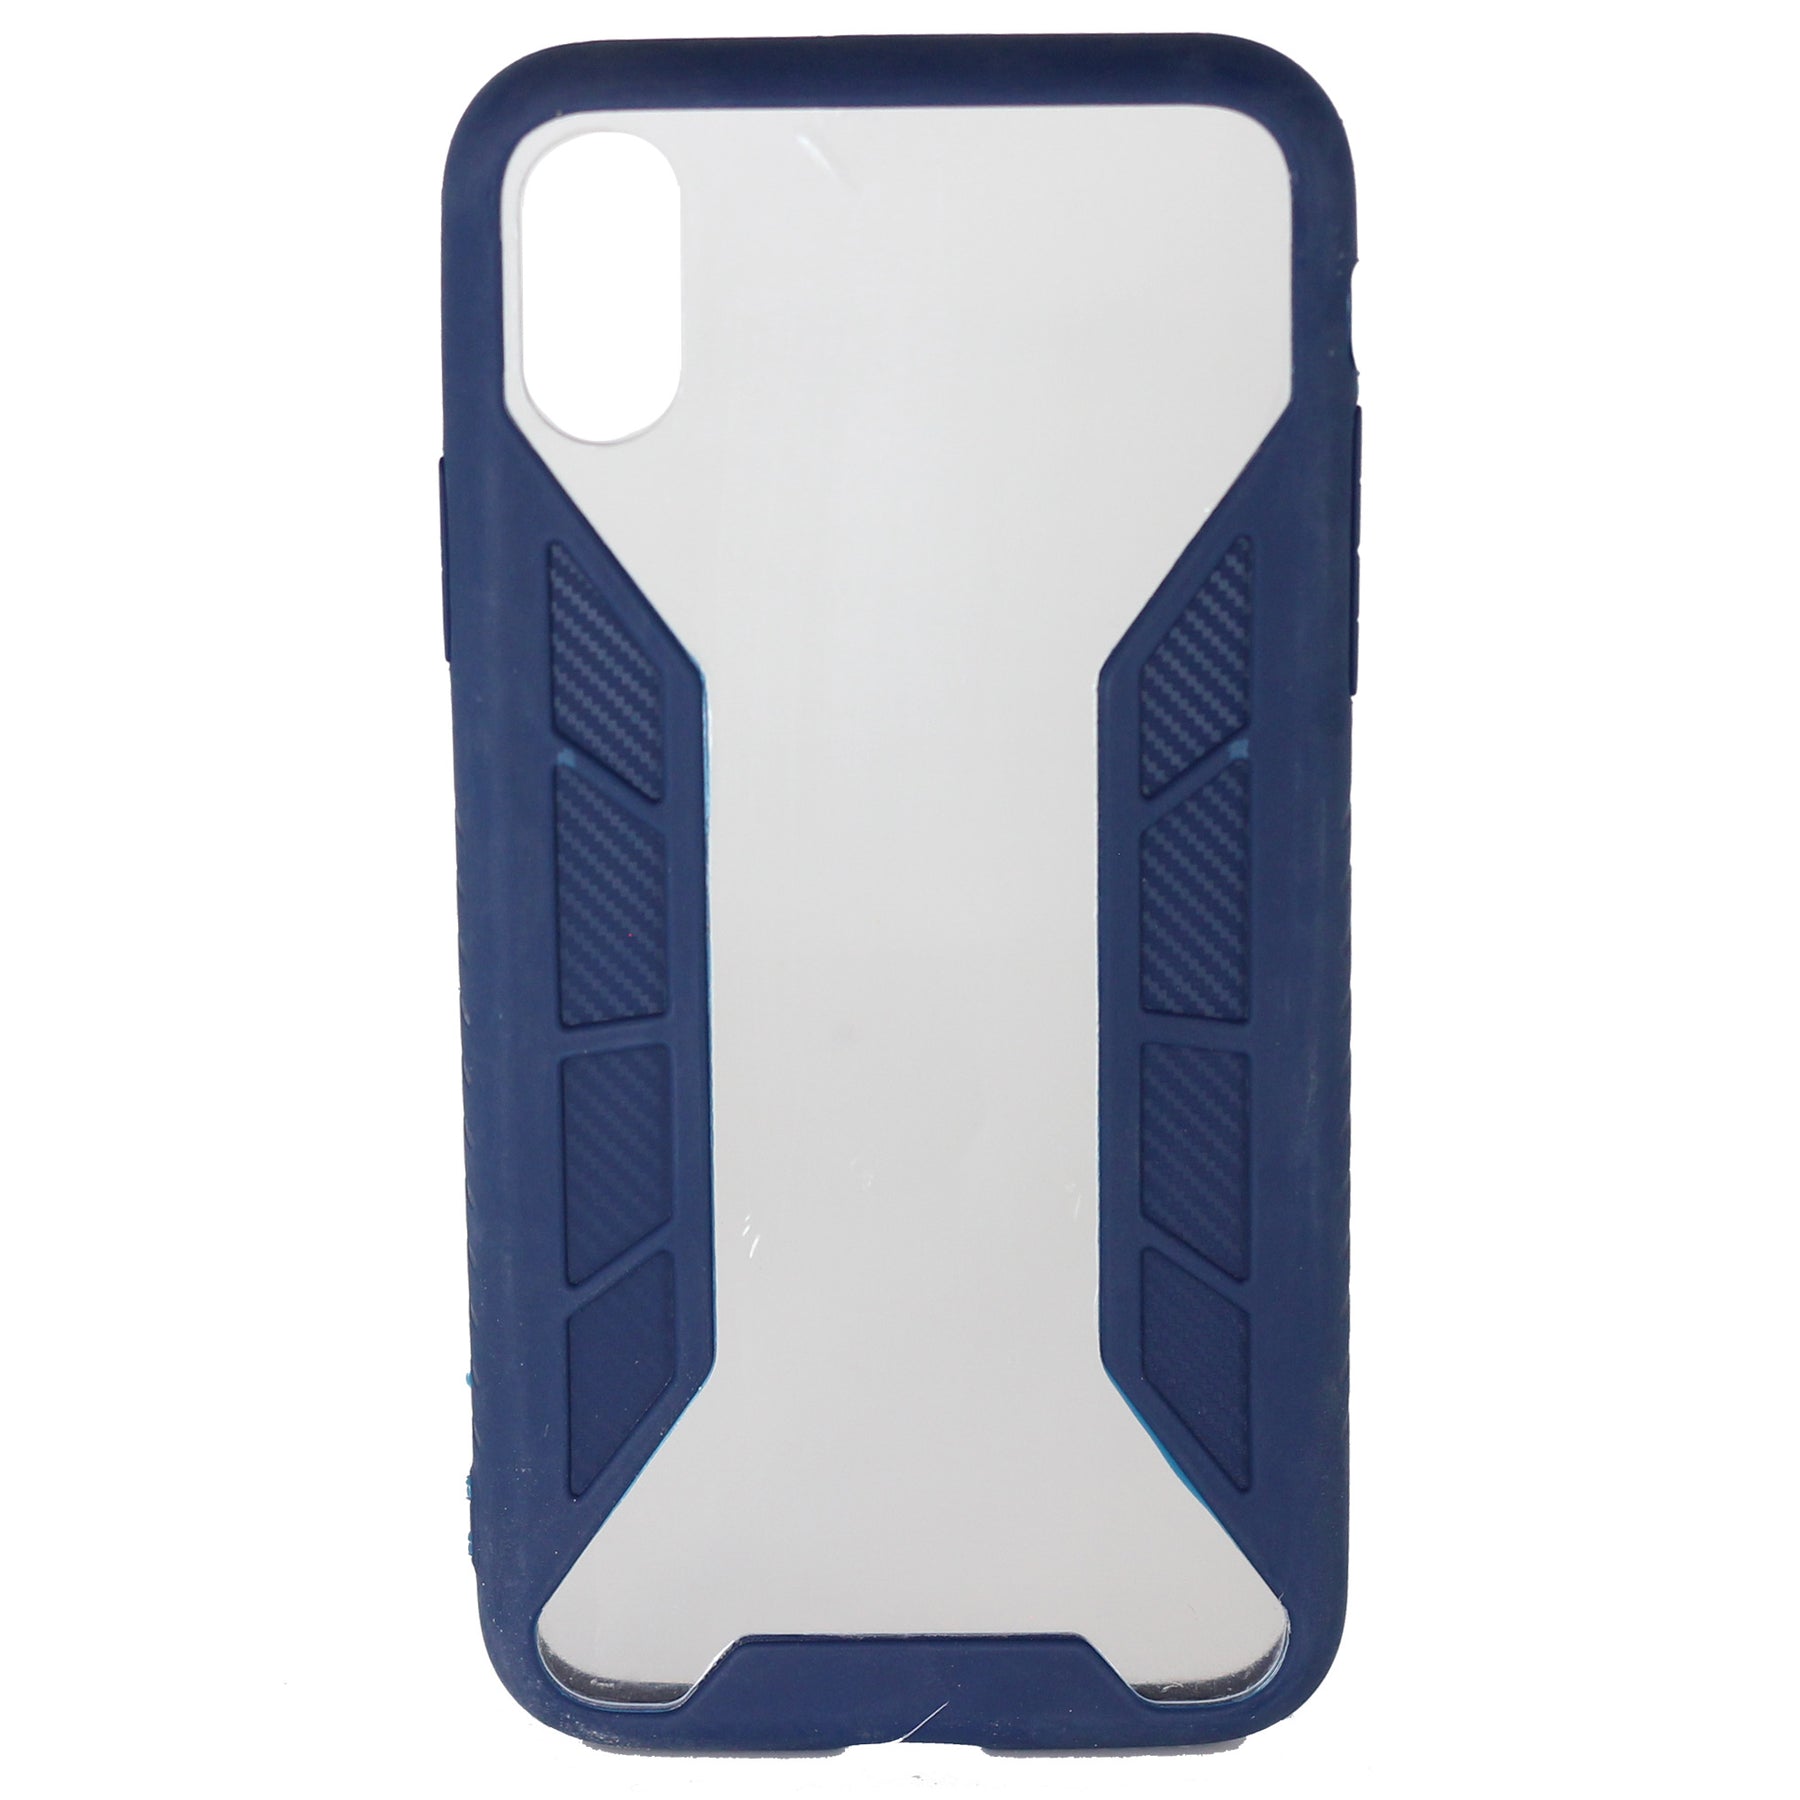 iPhone X clear blue case